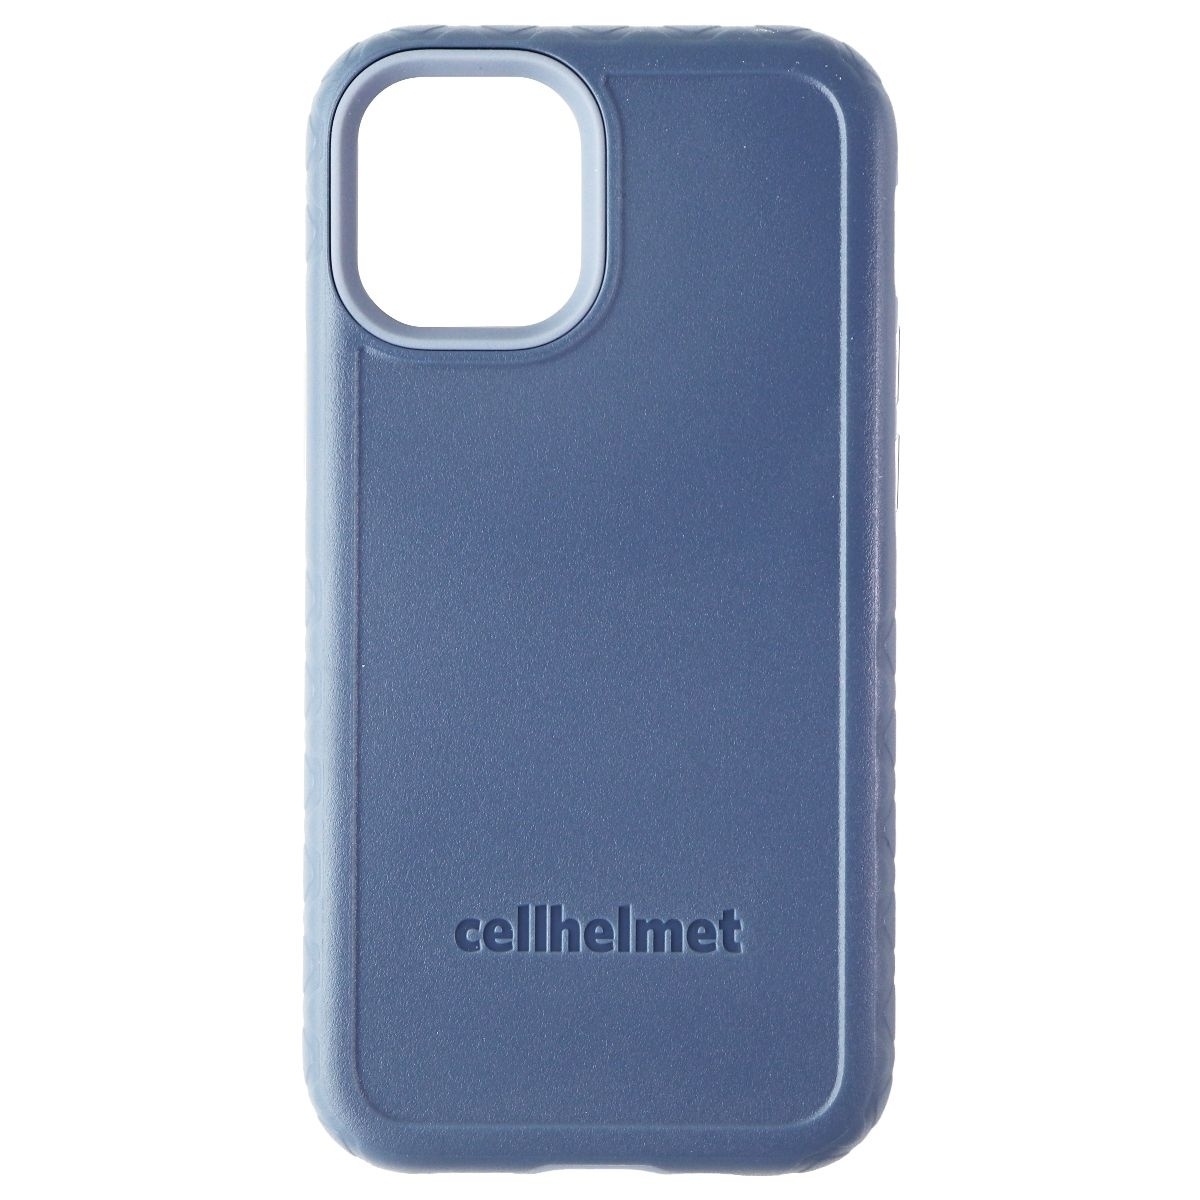 Cellhelmet - Fortitude Series - Slate Blue Protective Case For IPhone 12 Mini